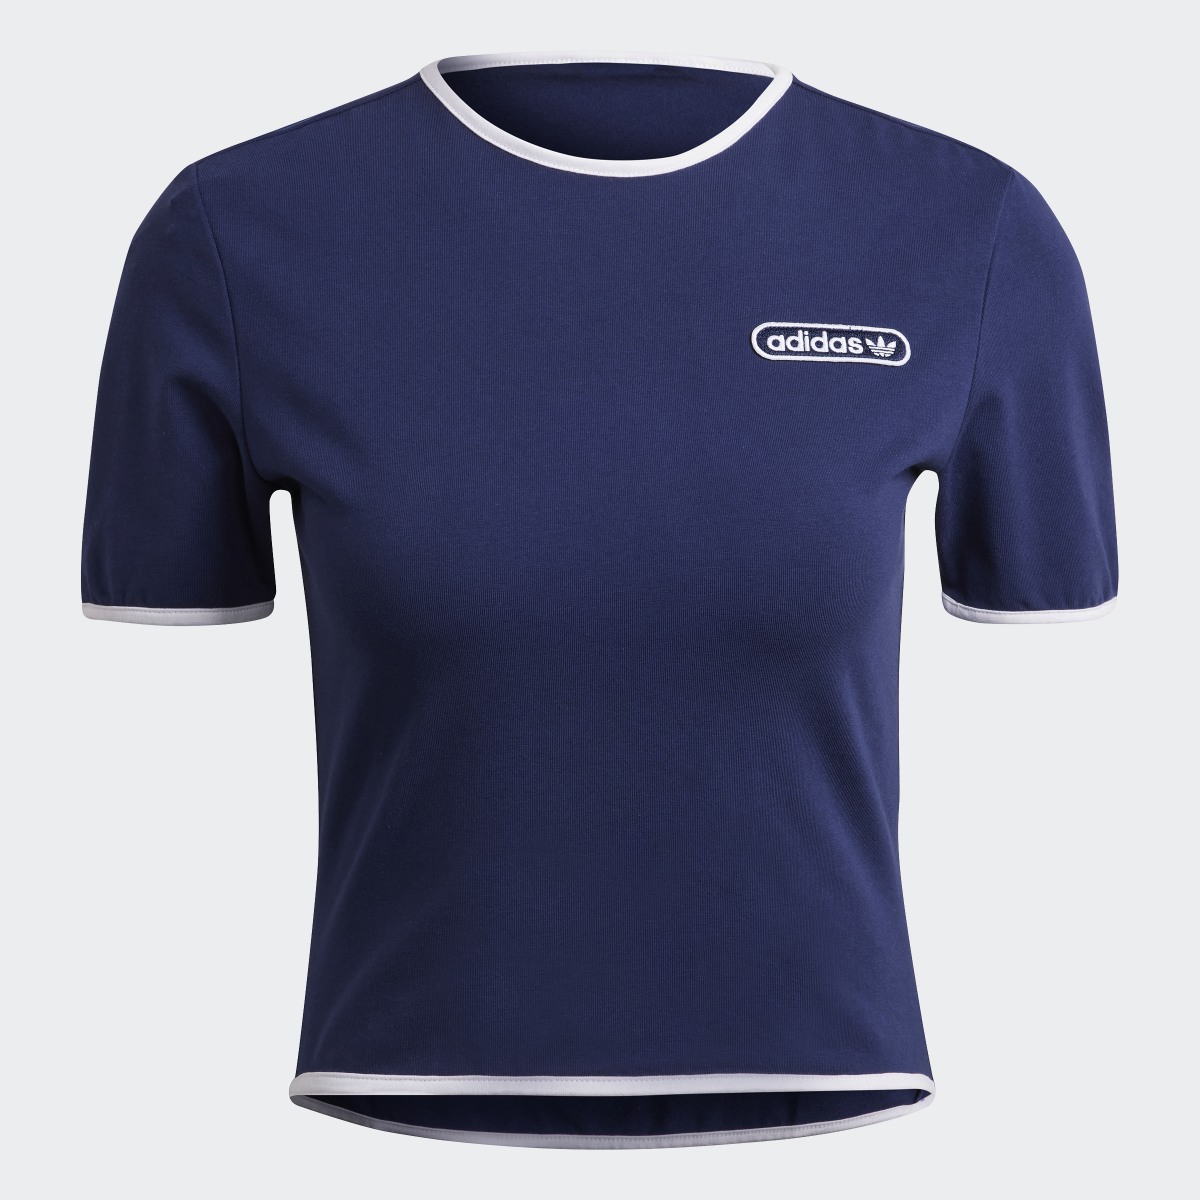 Adidas T-shirt Crop with Binding Details. 5